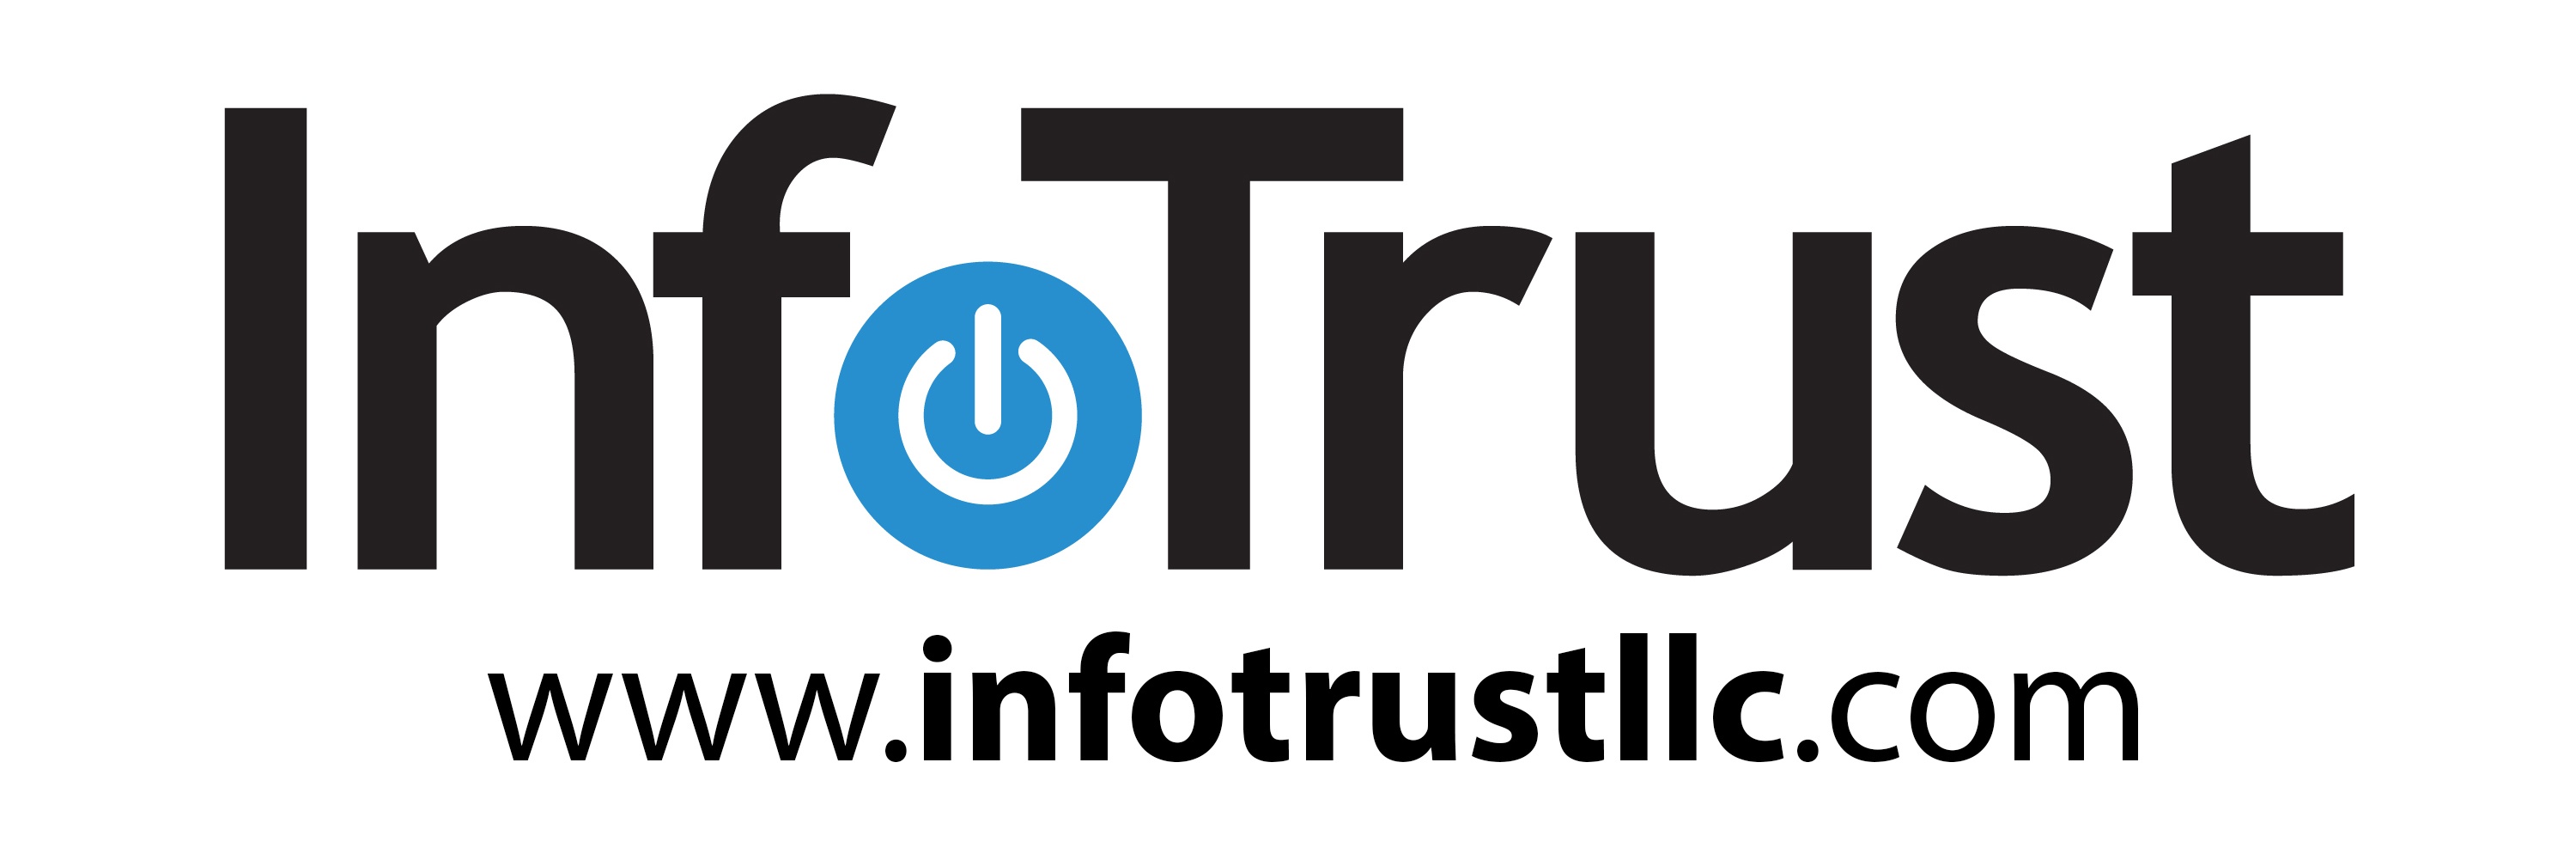 InfoTrust-Logo-with-URL